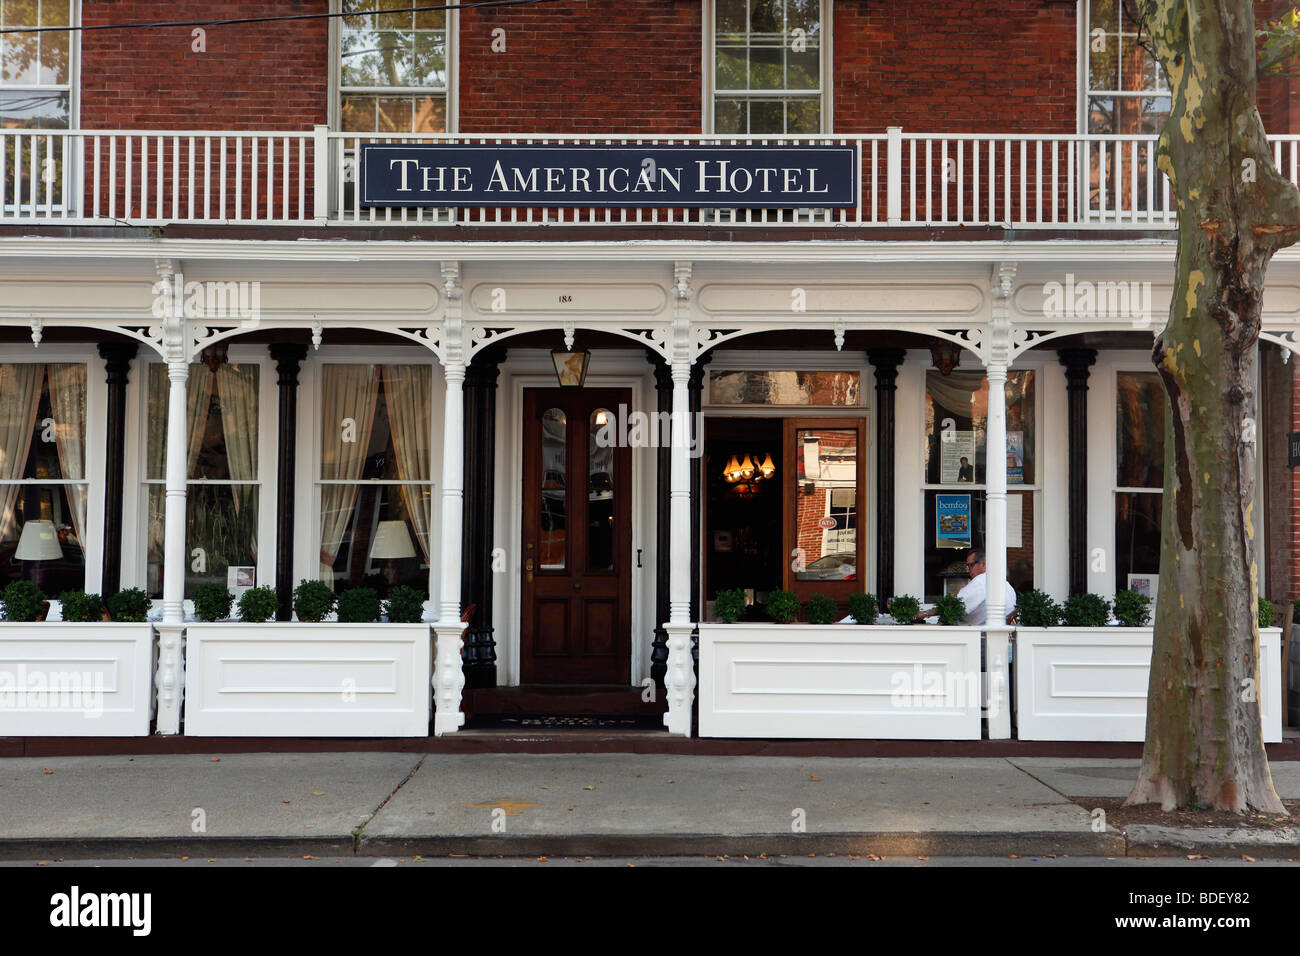 The American Hotel, Main Street, Sag Harbor, New York Stock Photo - Alamy